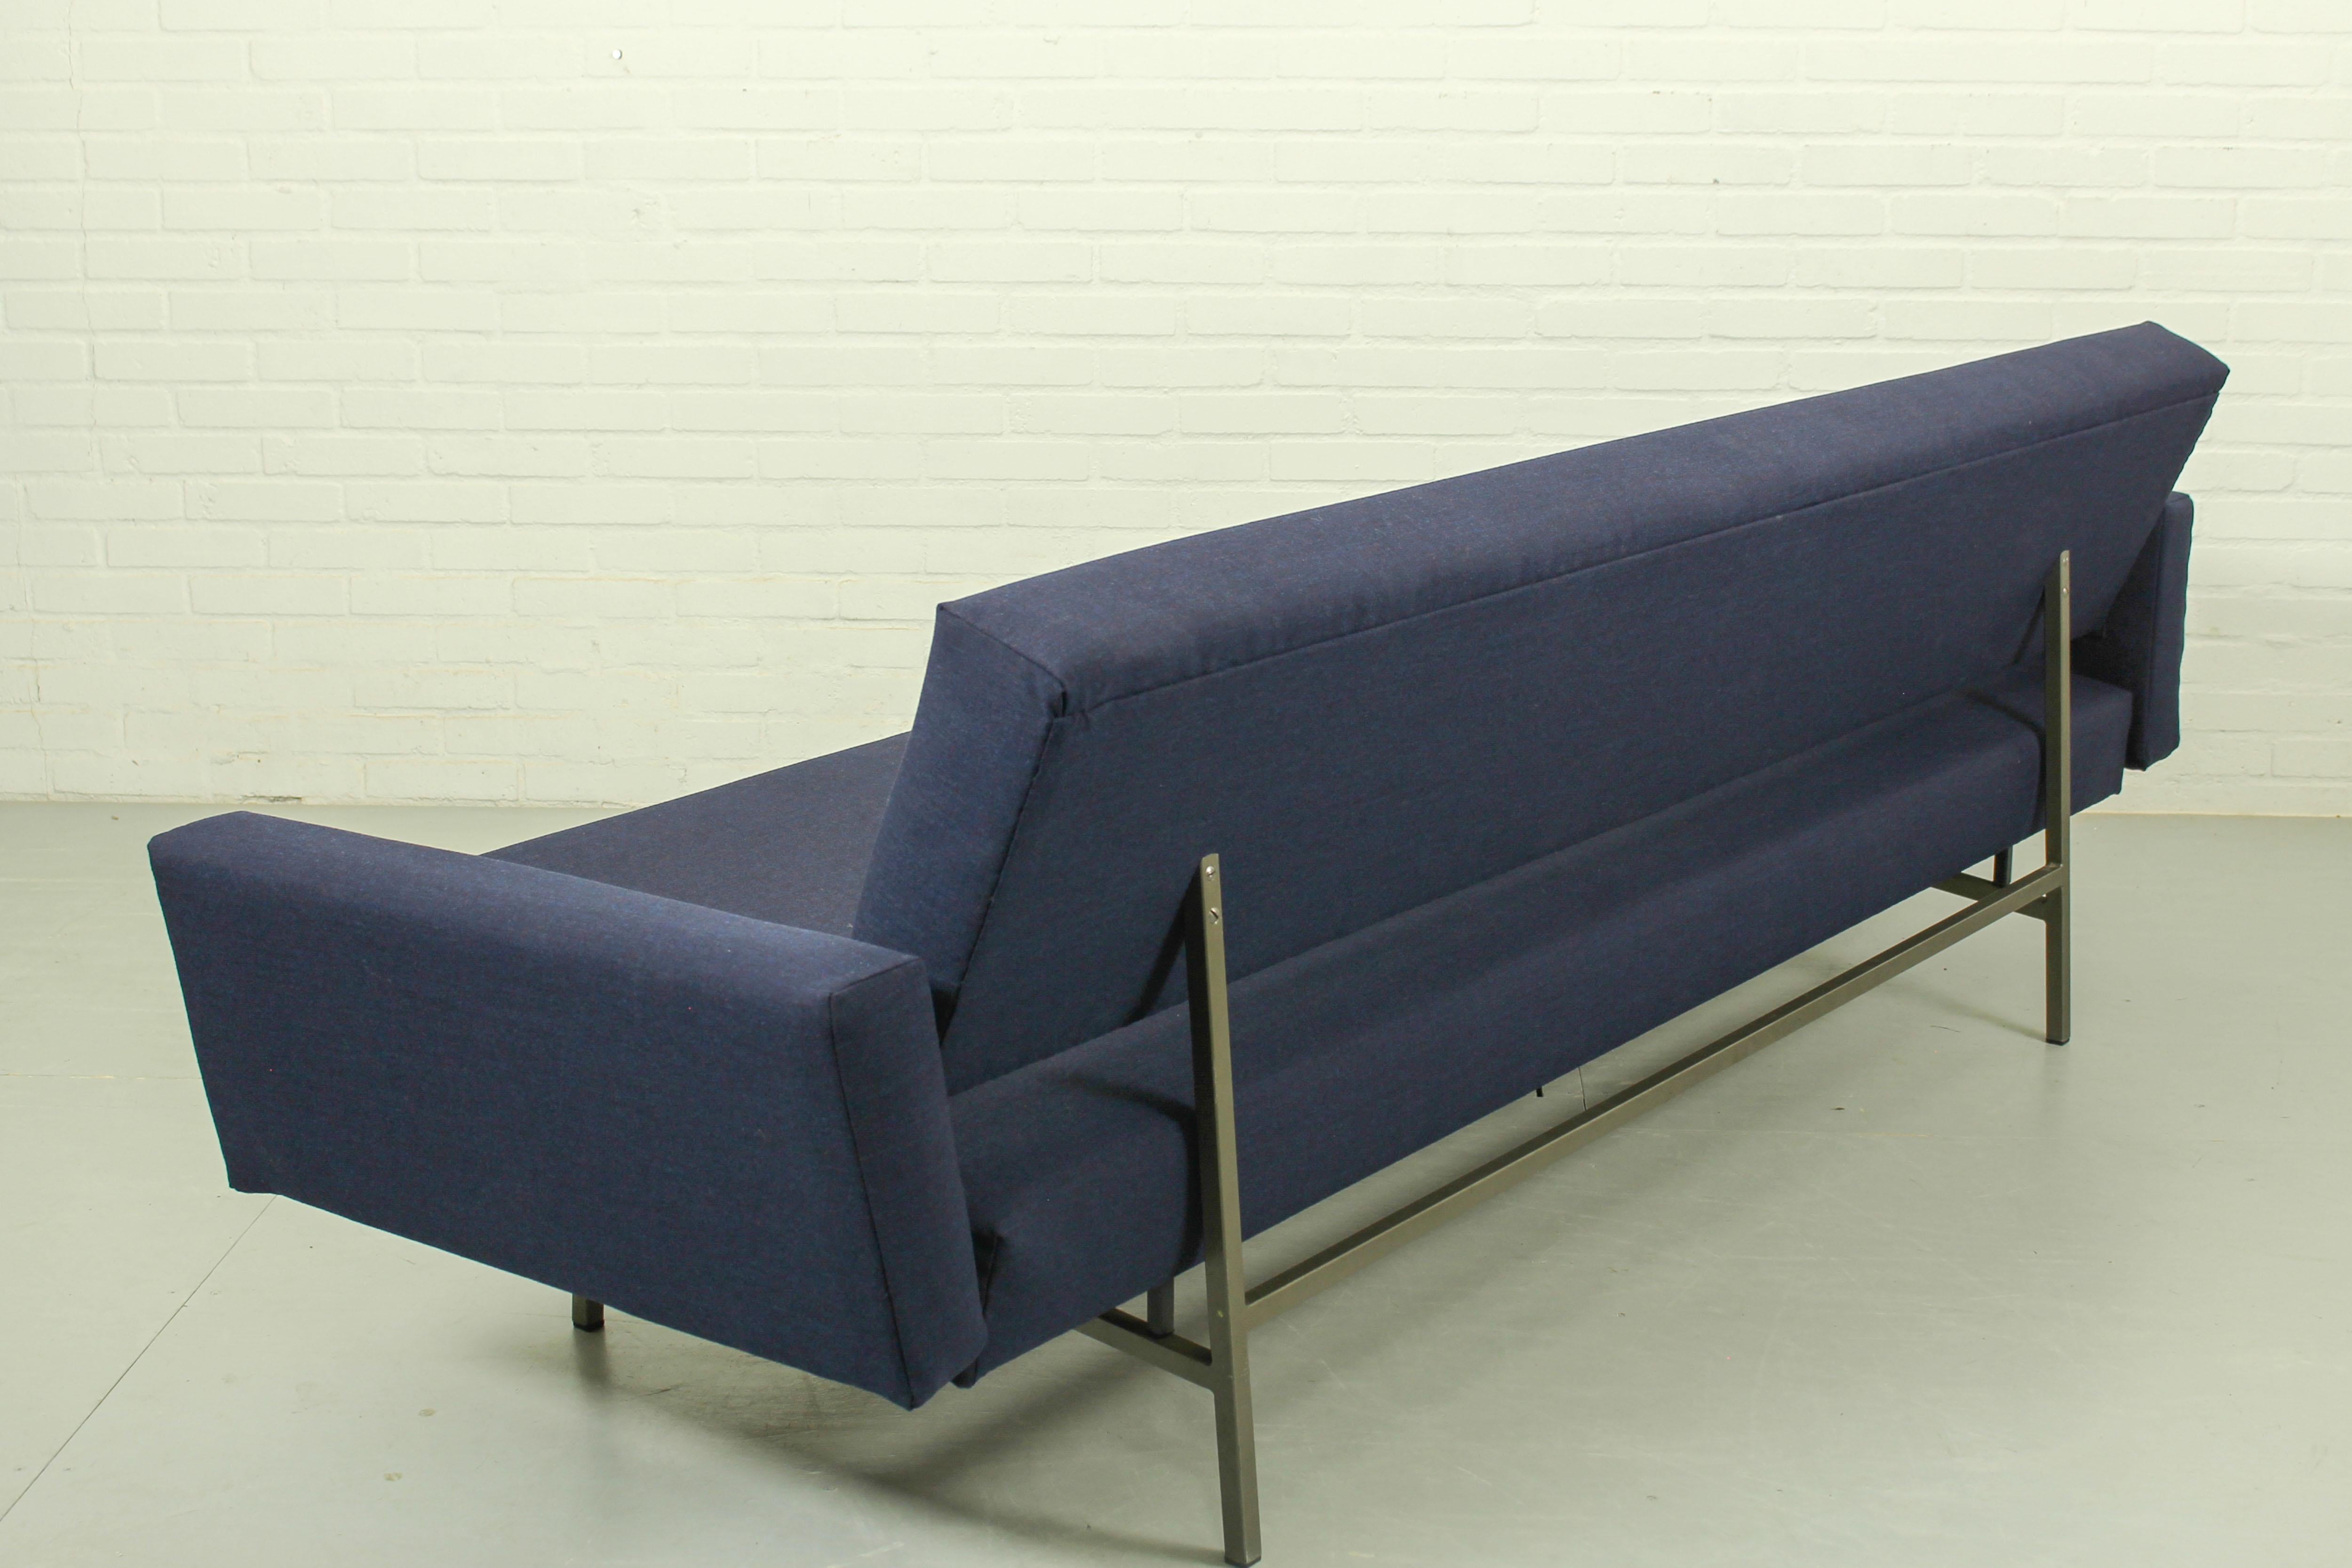 Metal Sofa/ Daybed by Rob Parry for Gelderland, Netherlands, 1950s For Sale